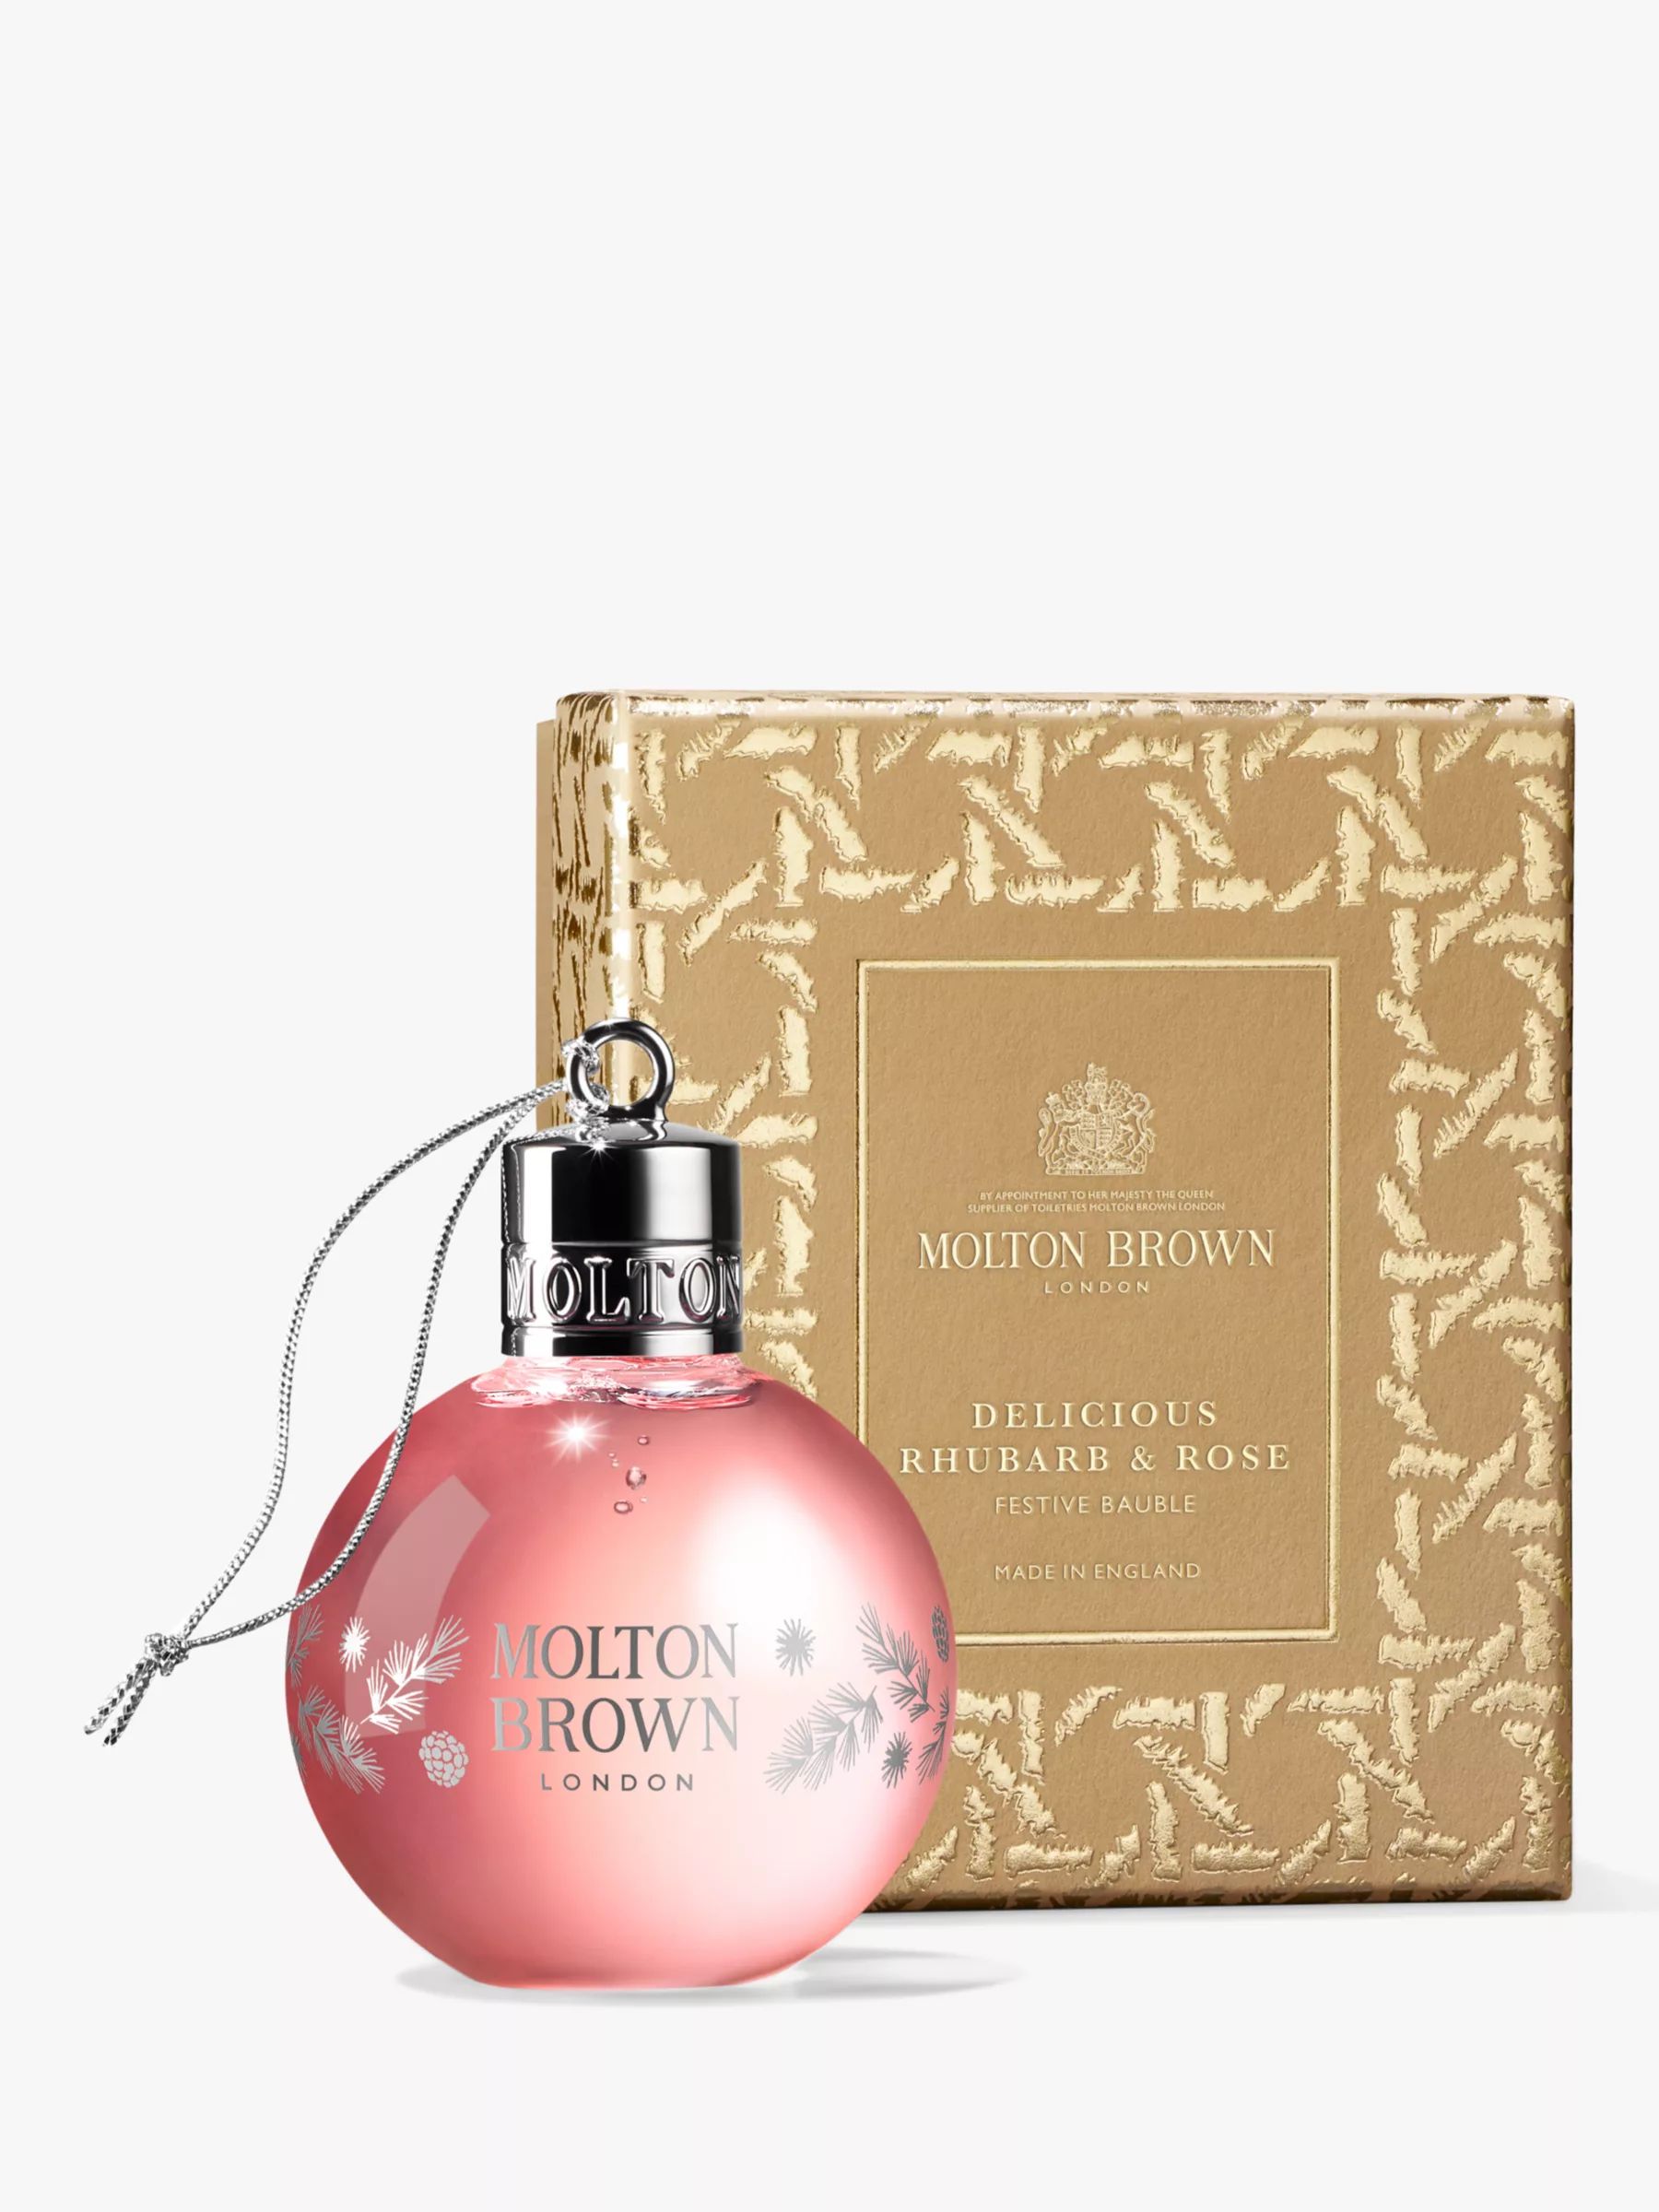 Molton Brown Delicious Rhubarb & Rose Festive Bauble Bodycare Gift Set | John Lewis (UK)